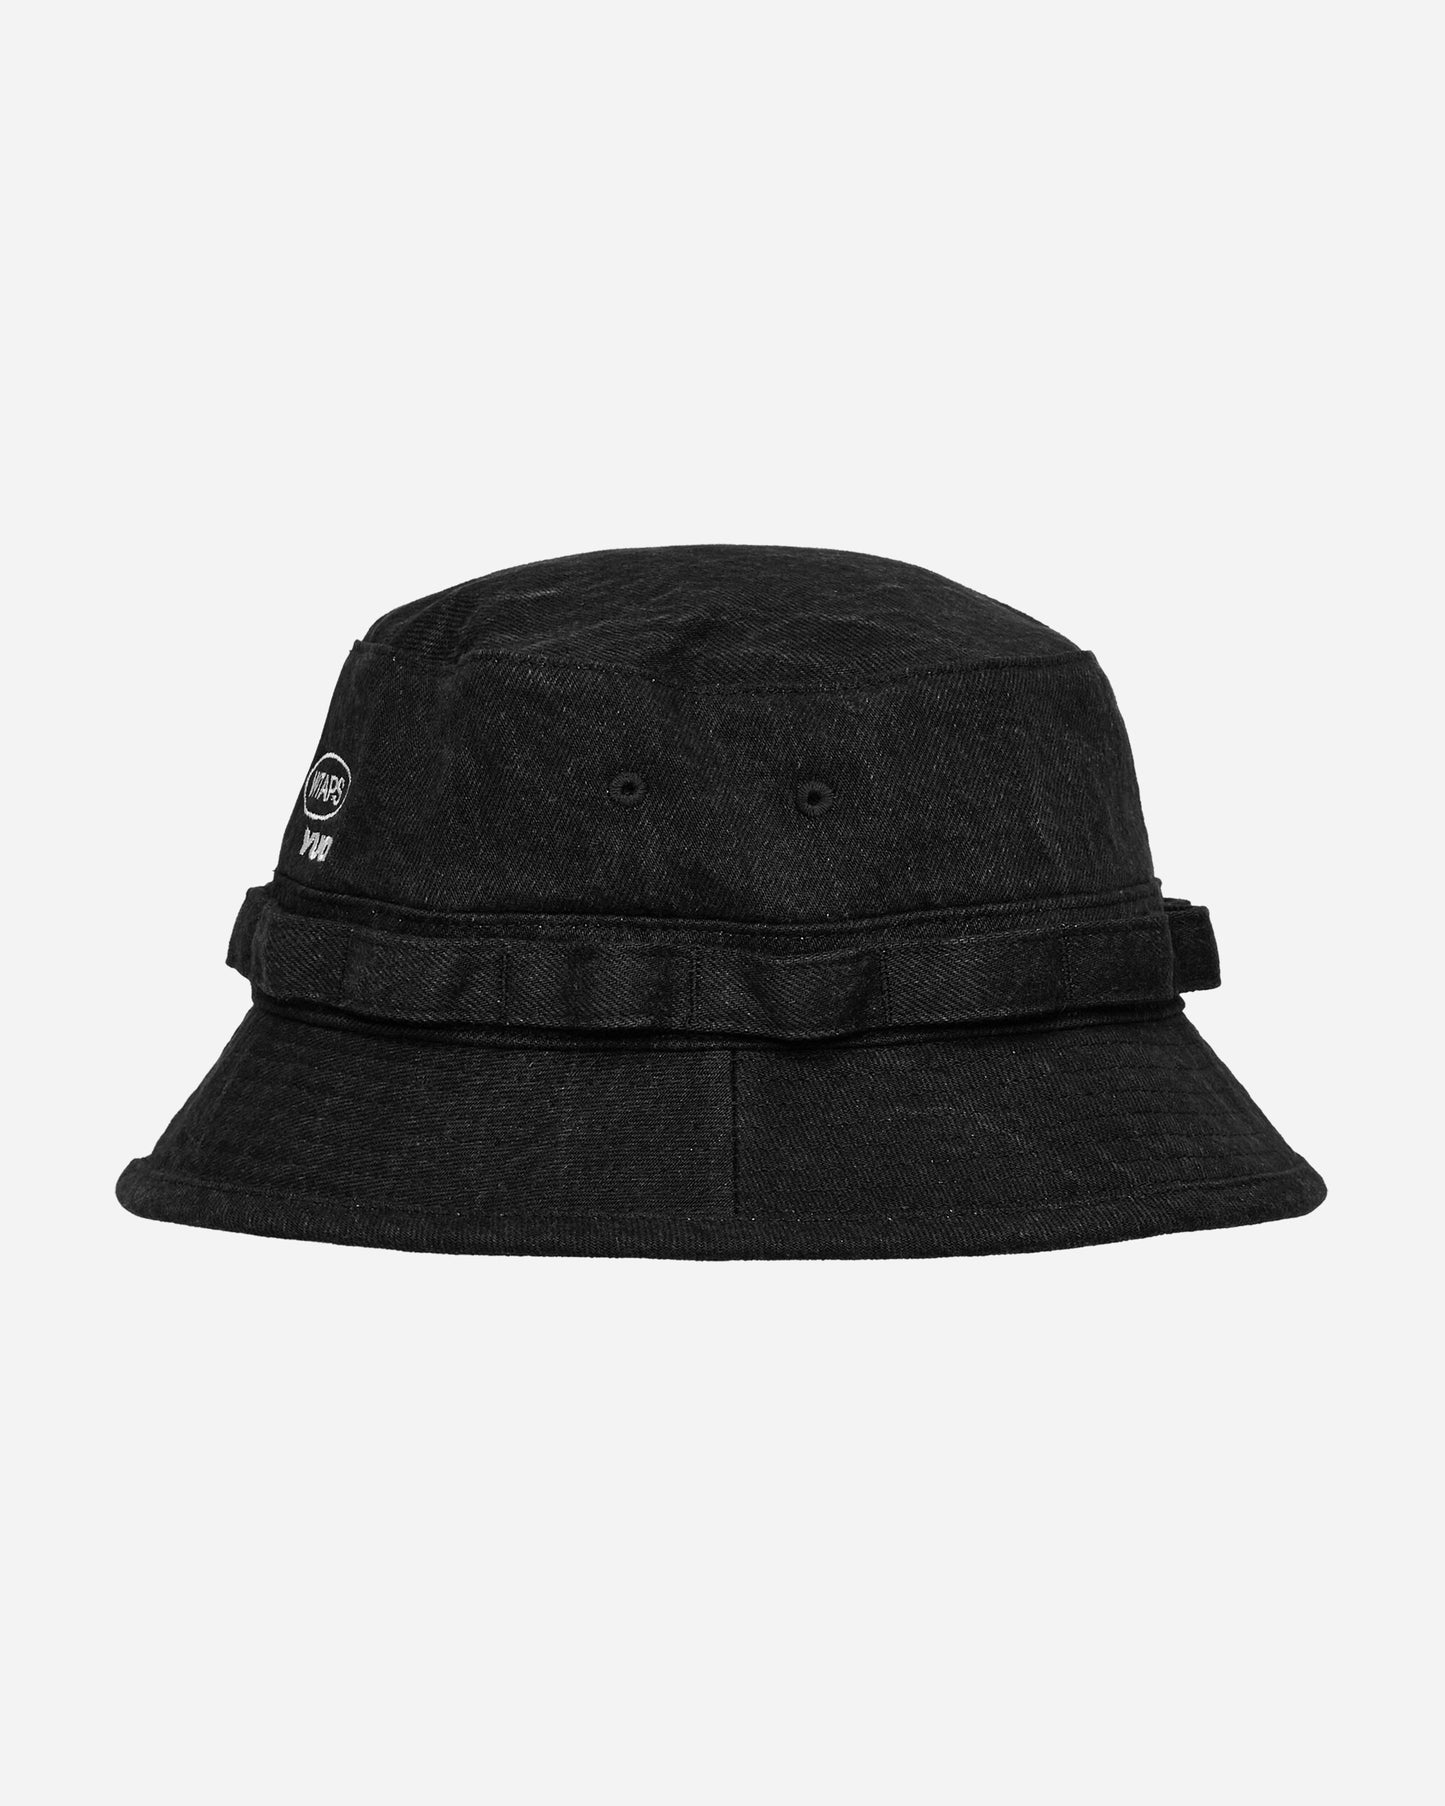 WTAPS Hat 22 Black Hats Bucket 232HCDT-HT20 BK